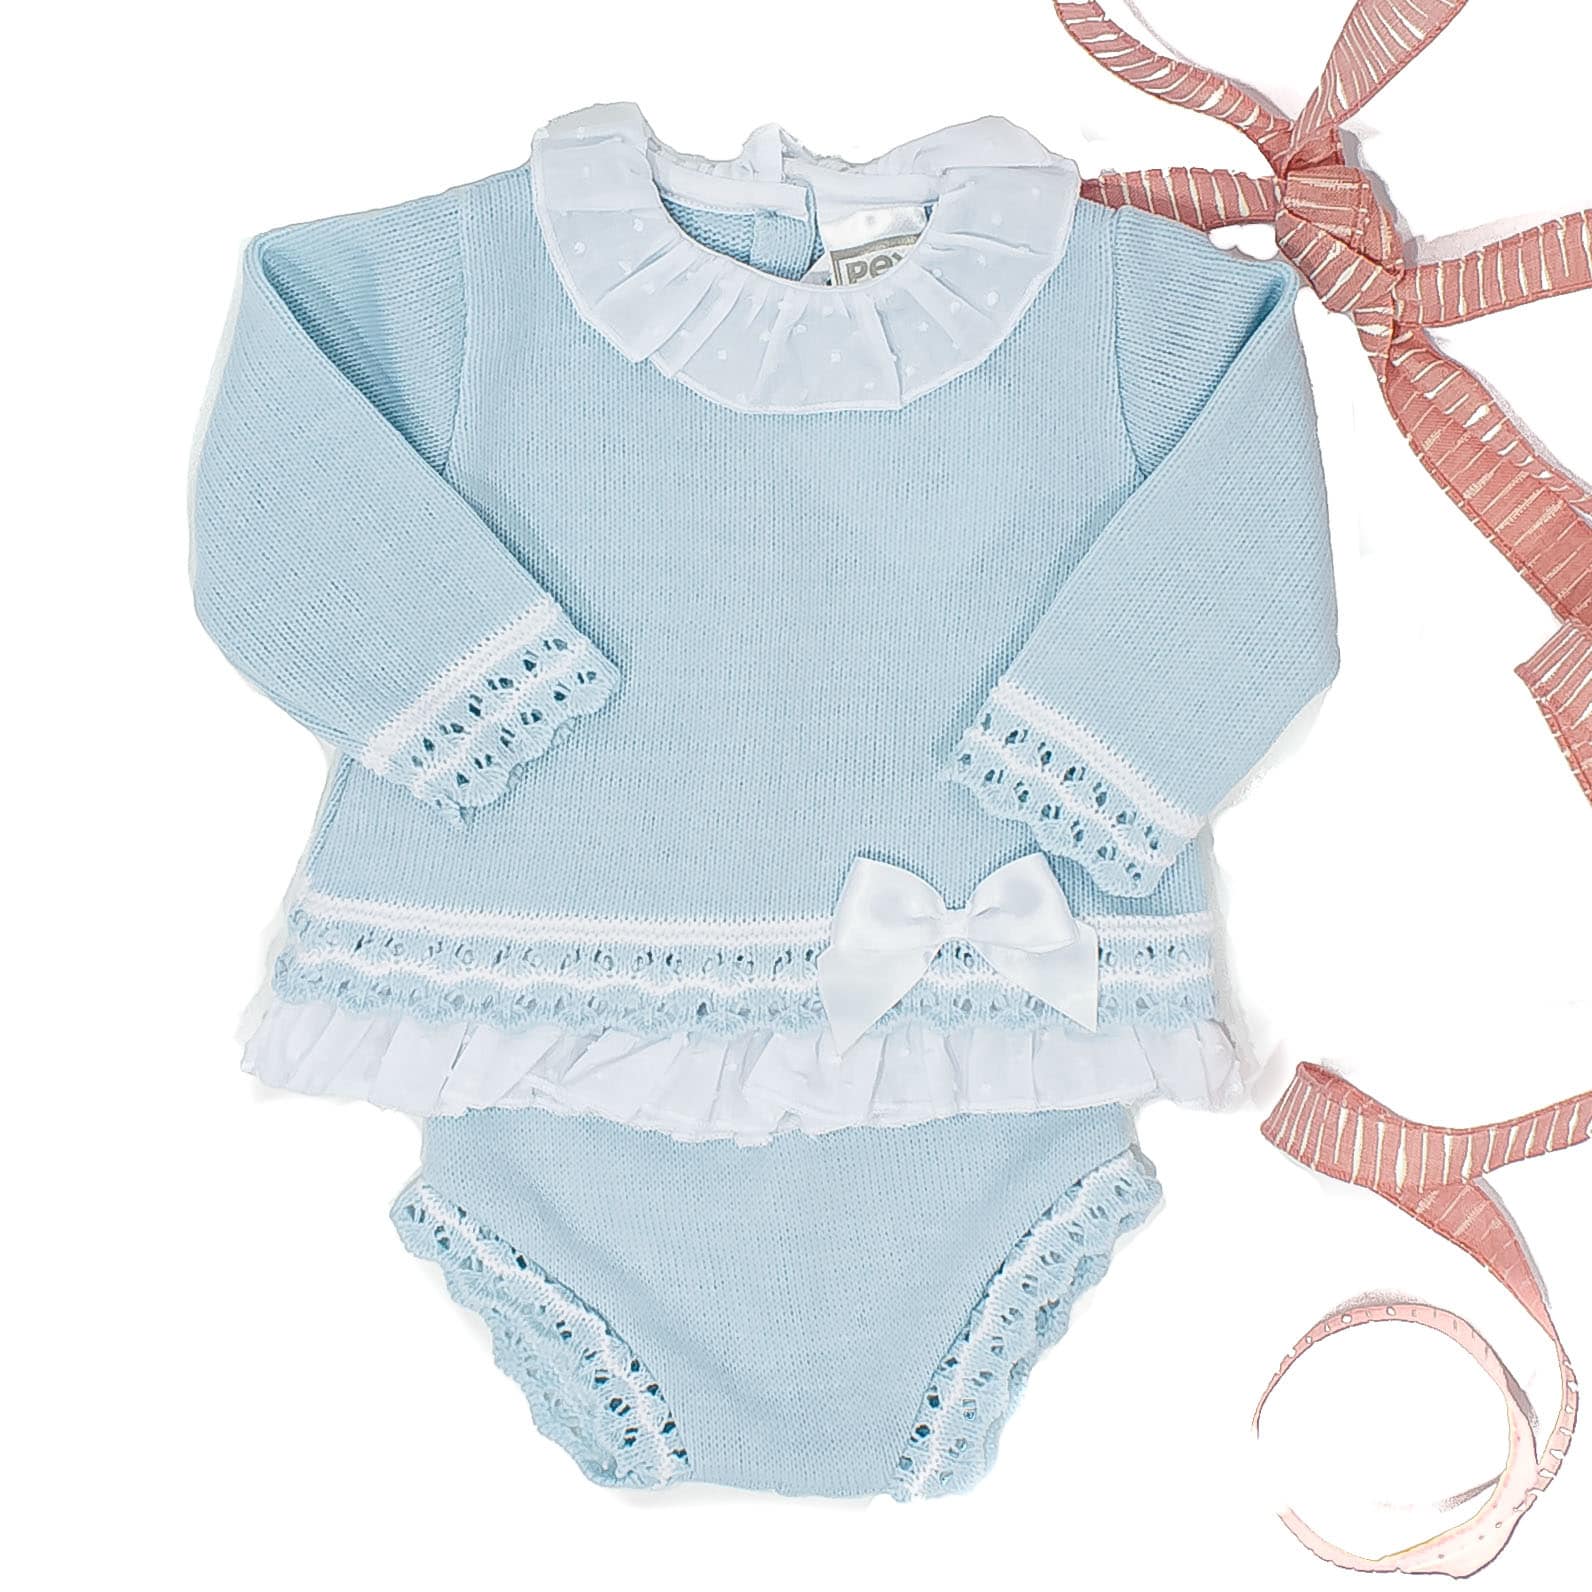 baby-clothing-r3-151-540.jpg